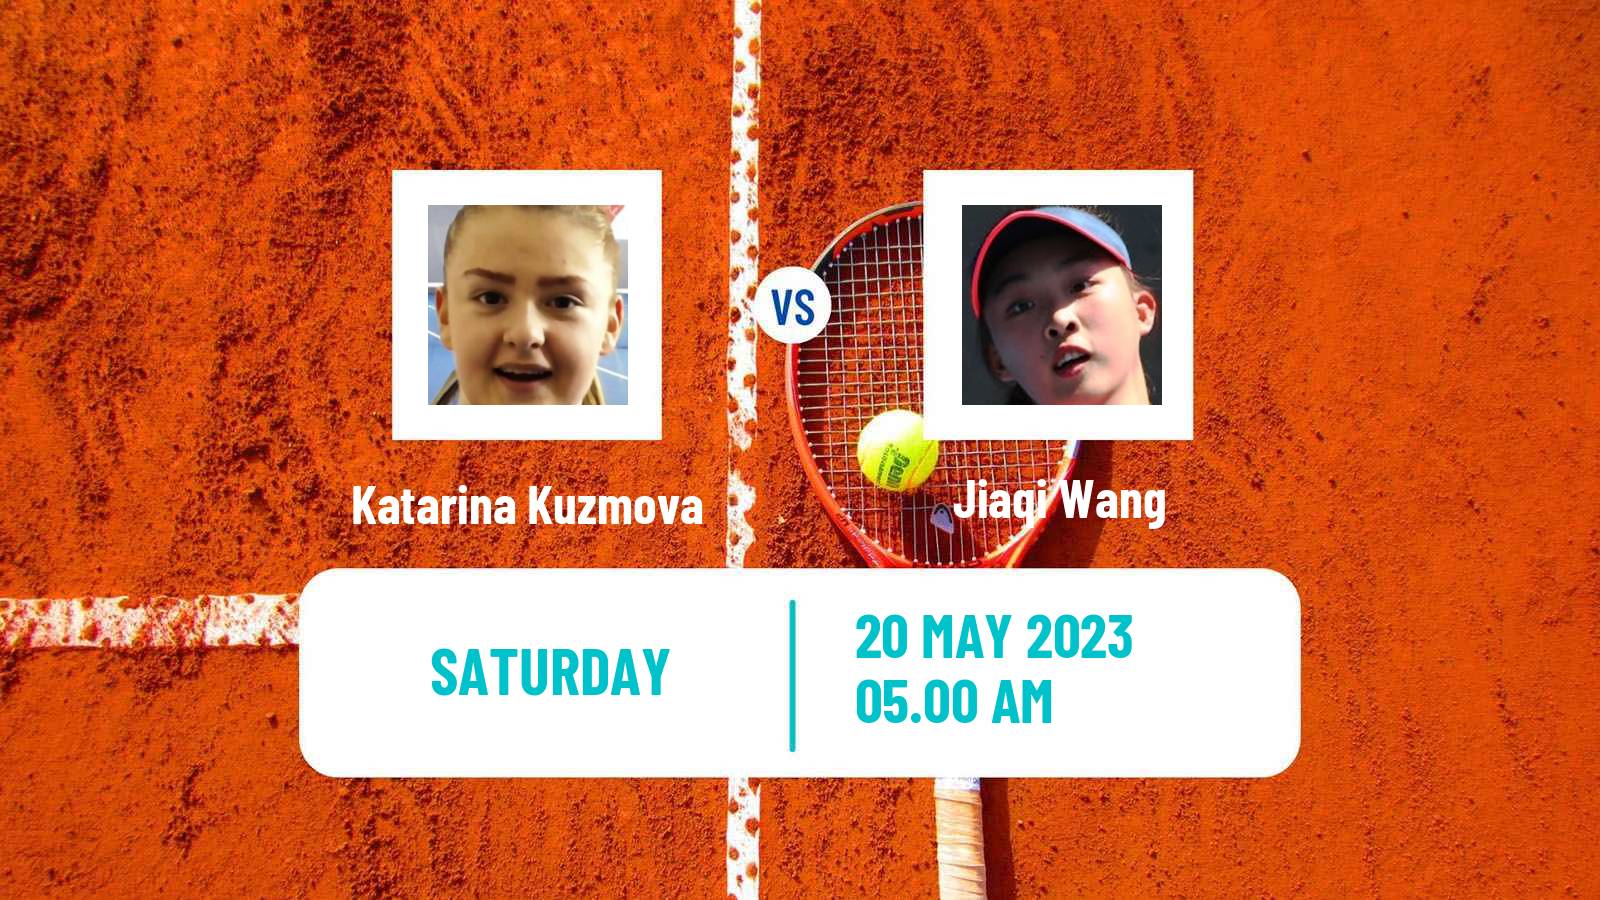 Tennis ITF W15 Monastir 16 Women Katarina Kuzmova - Jiaqi Wang